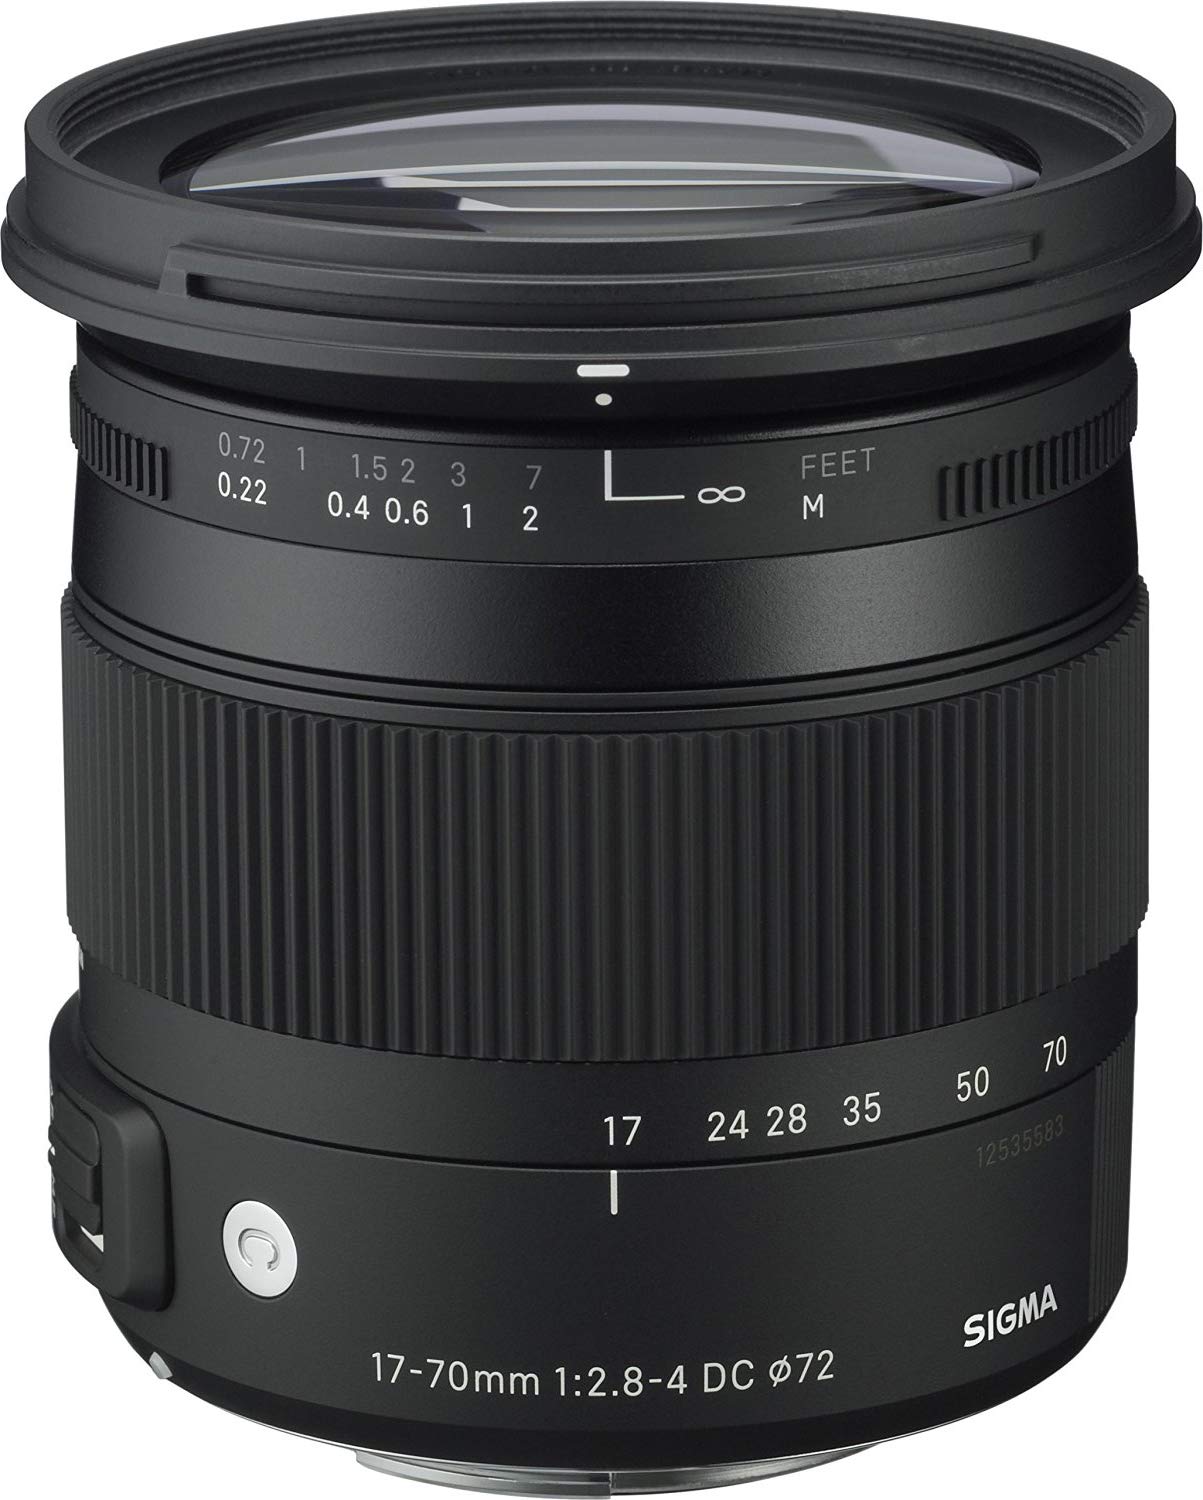 SIGMA 17-70mm F2.8-4 DC MACRO OS HSM Contemporary C013 Canon EF-Sマウント (中古品)